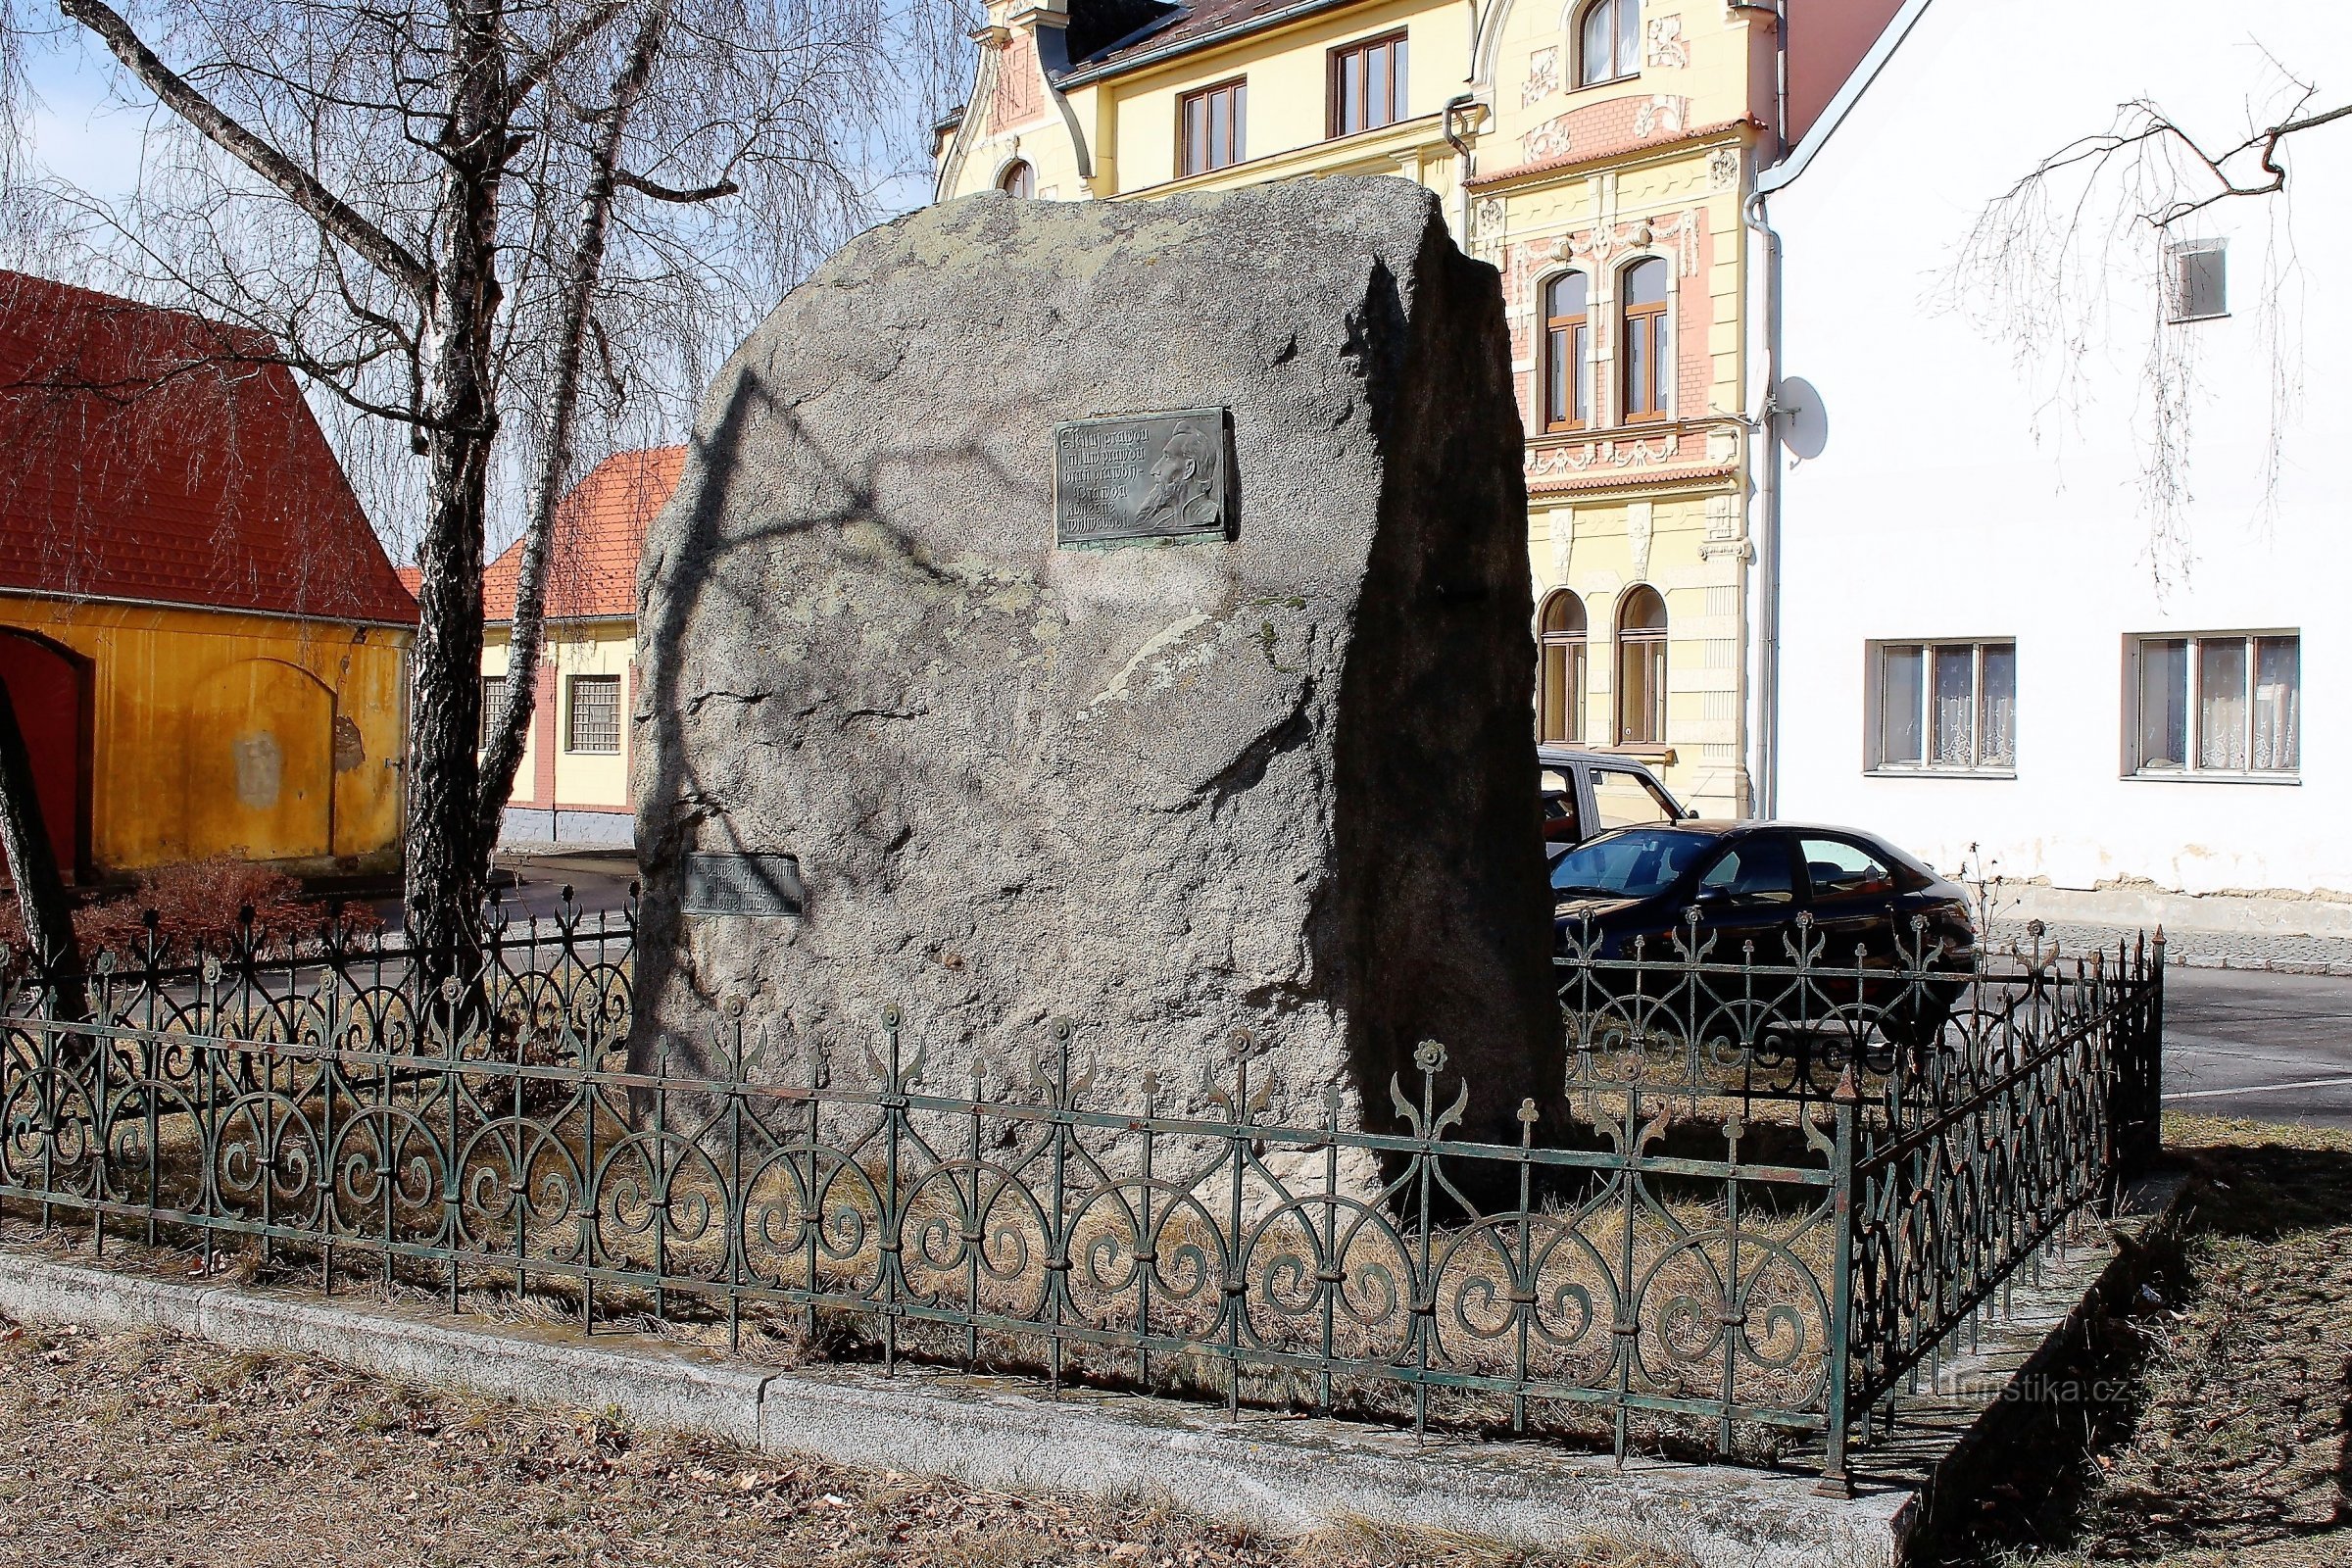 Monument to Master Jan Hus